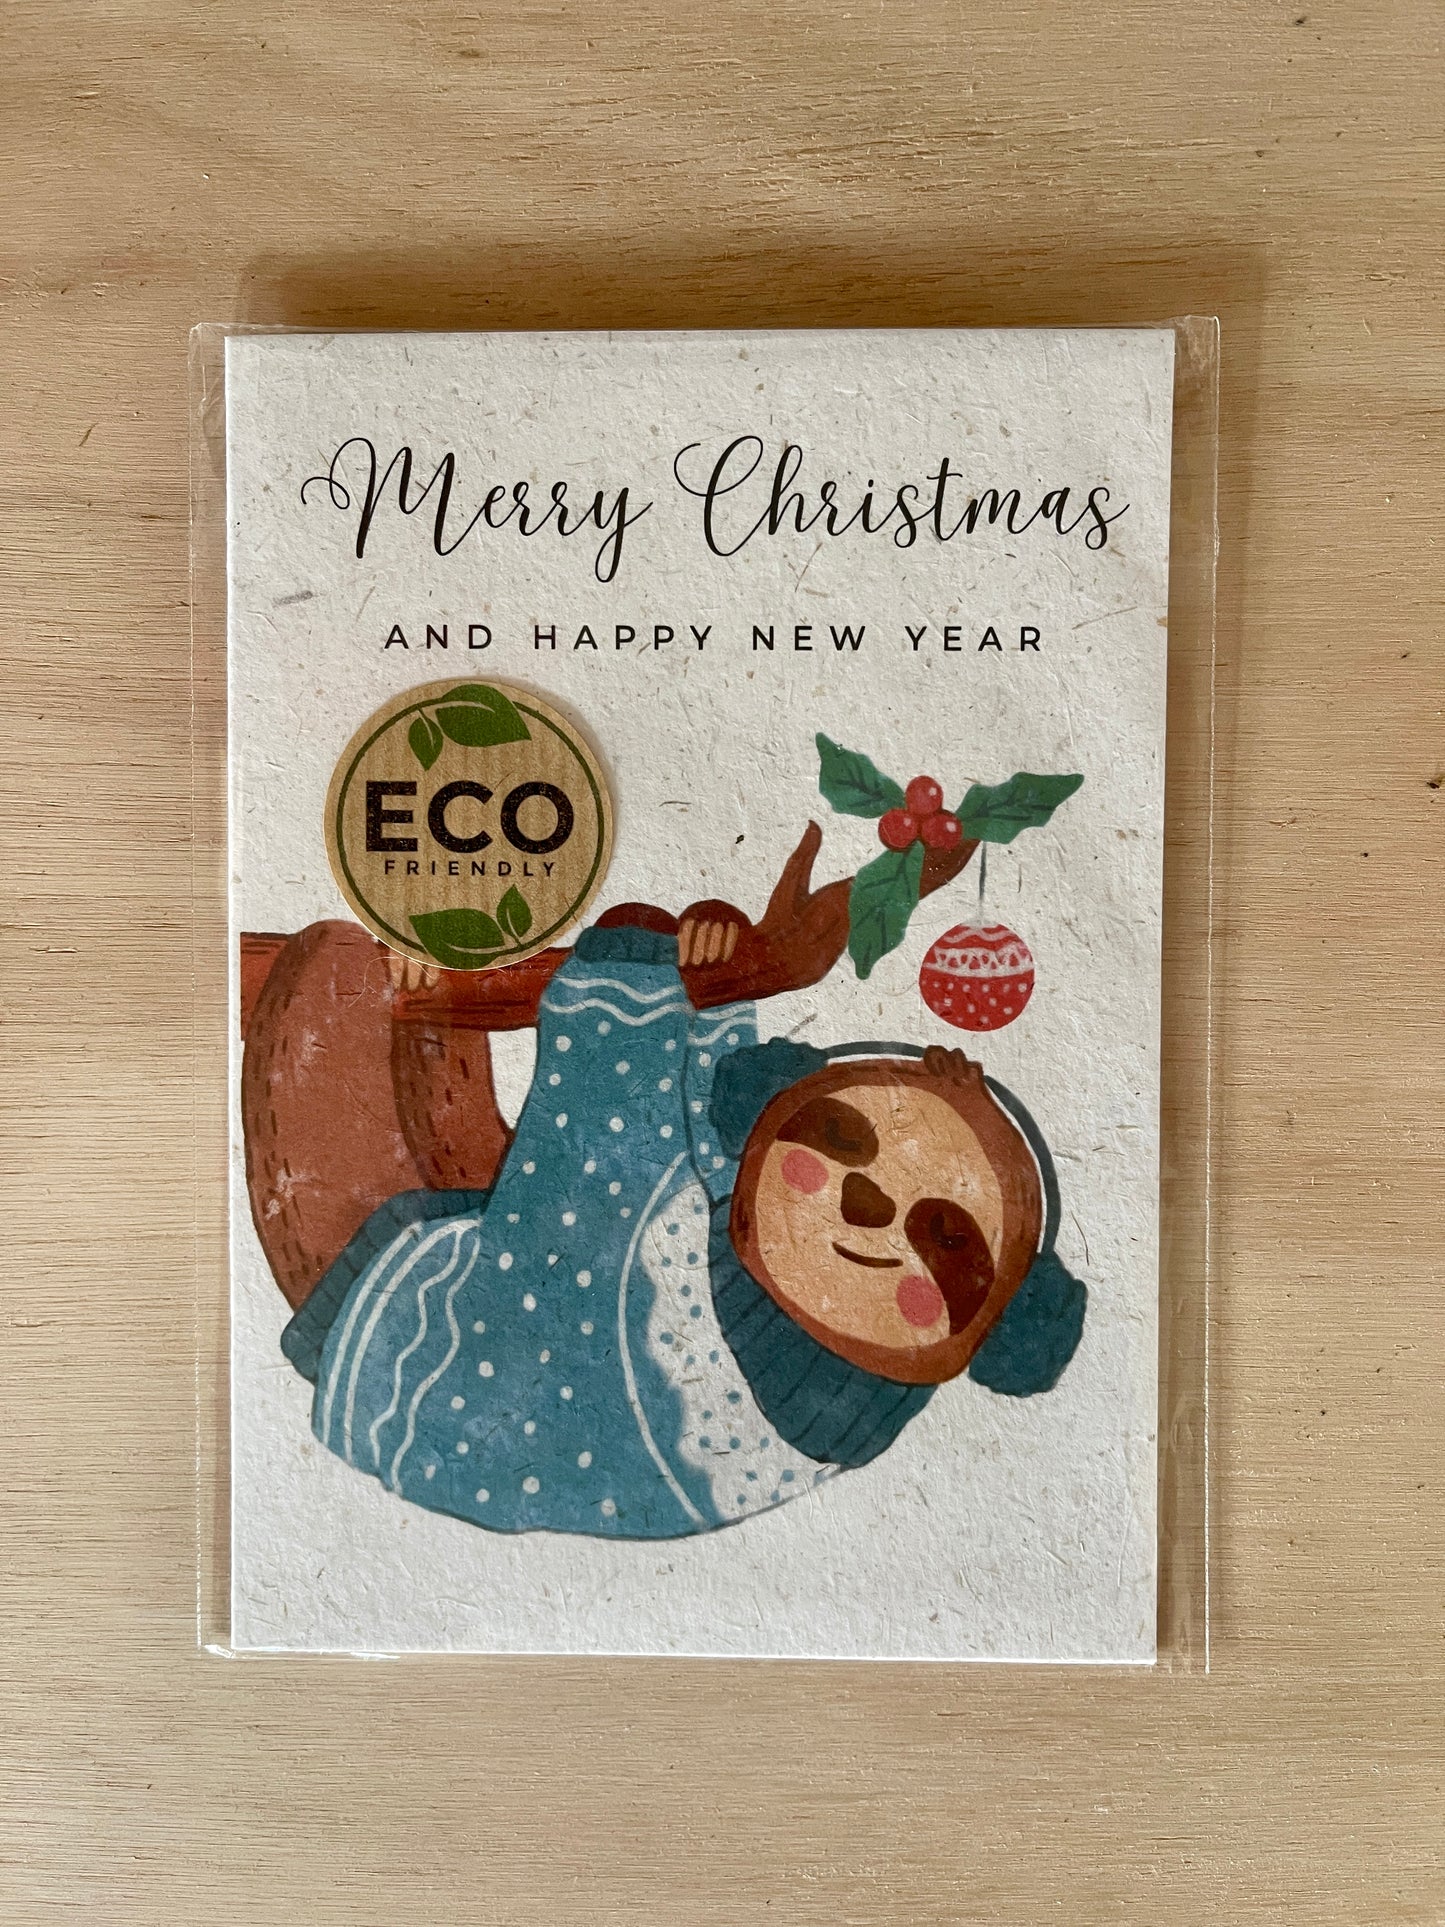 Eco friendly sloth Christmas cards